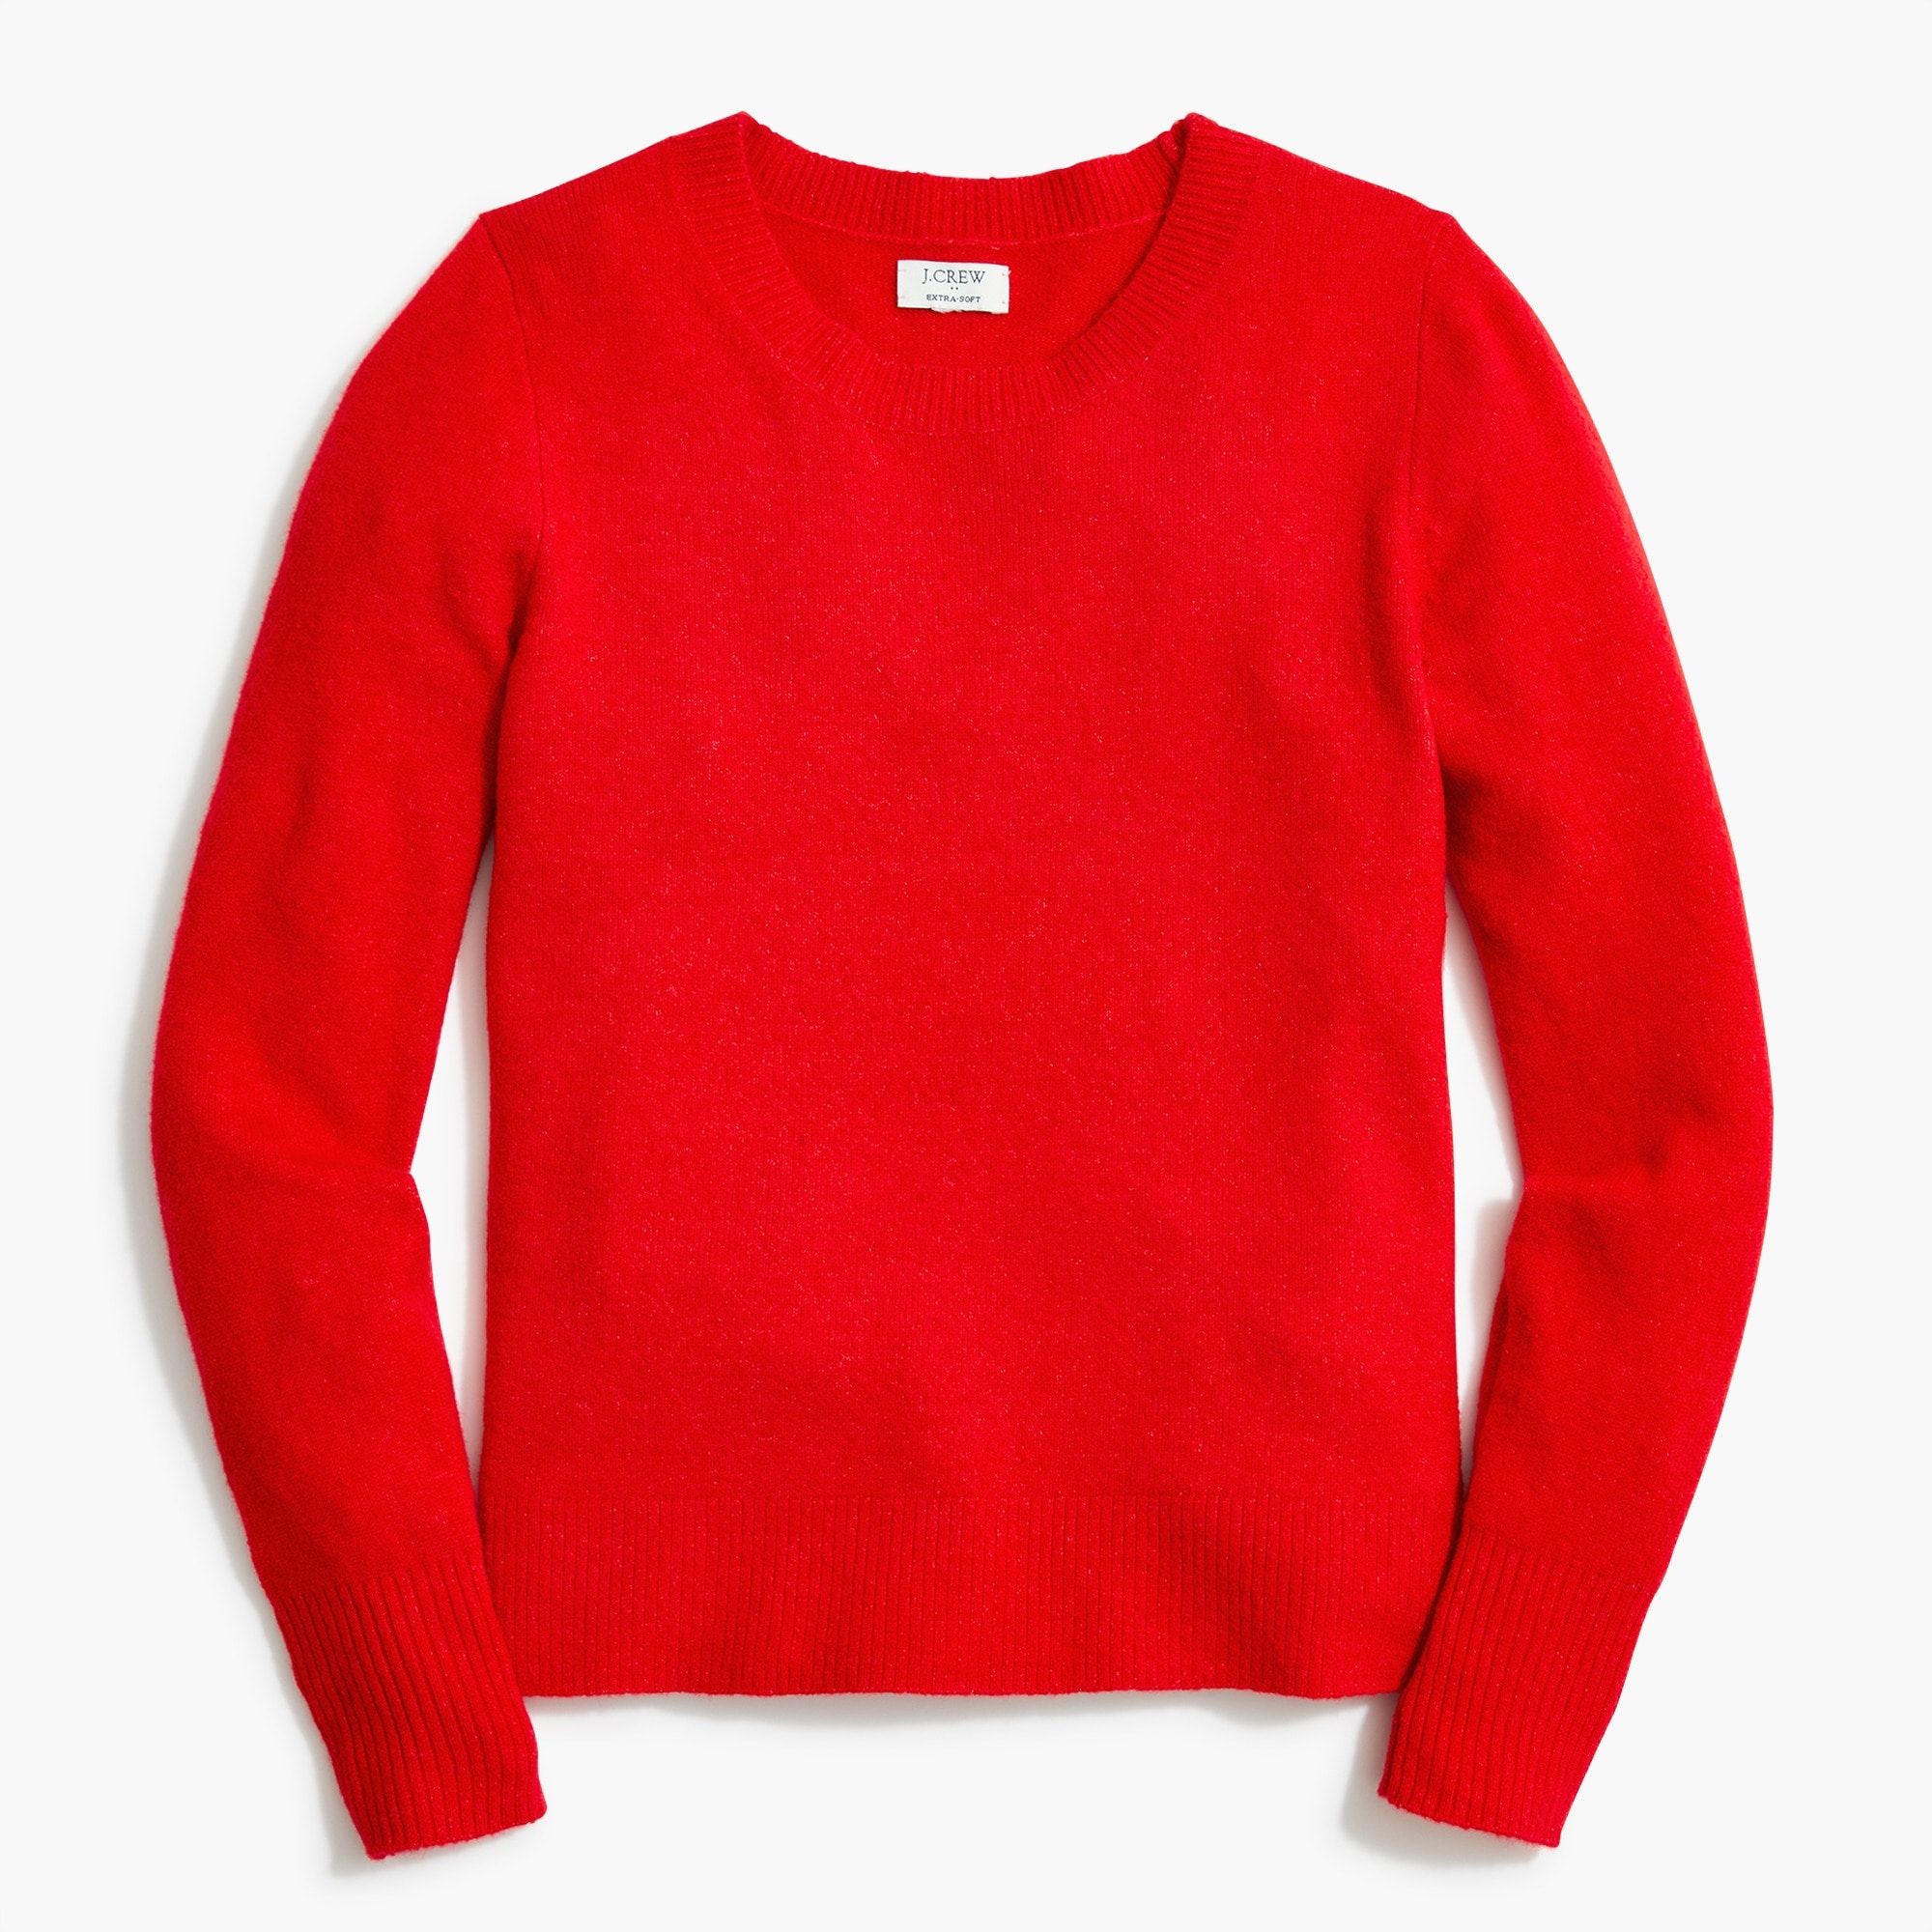 Crewneck sweater in extra-soft yarn | J.Crew Factory